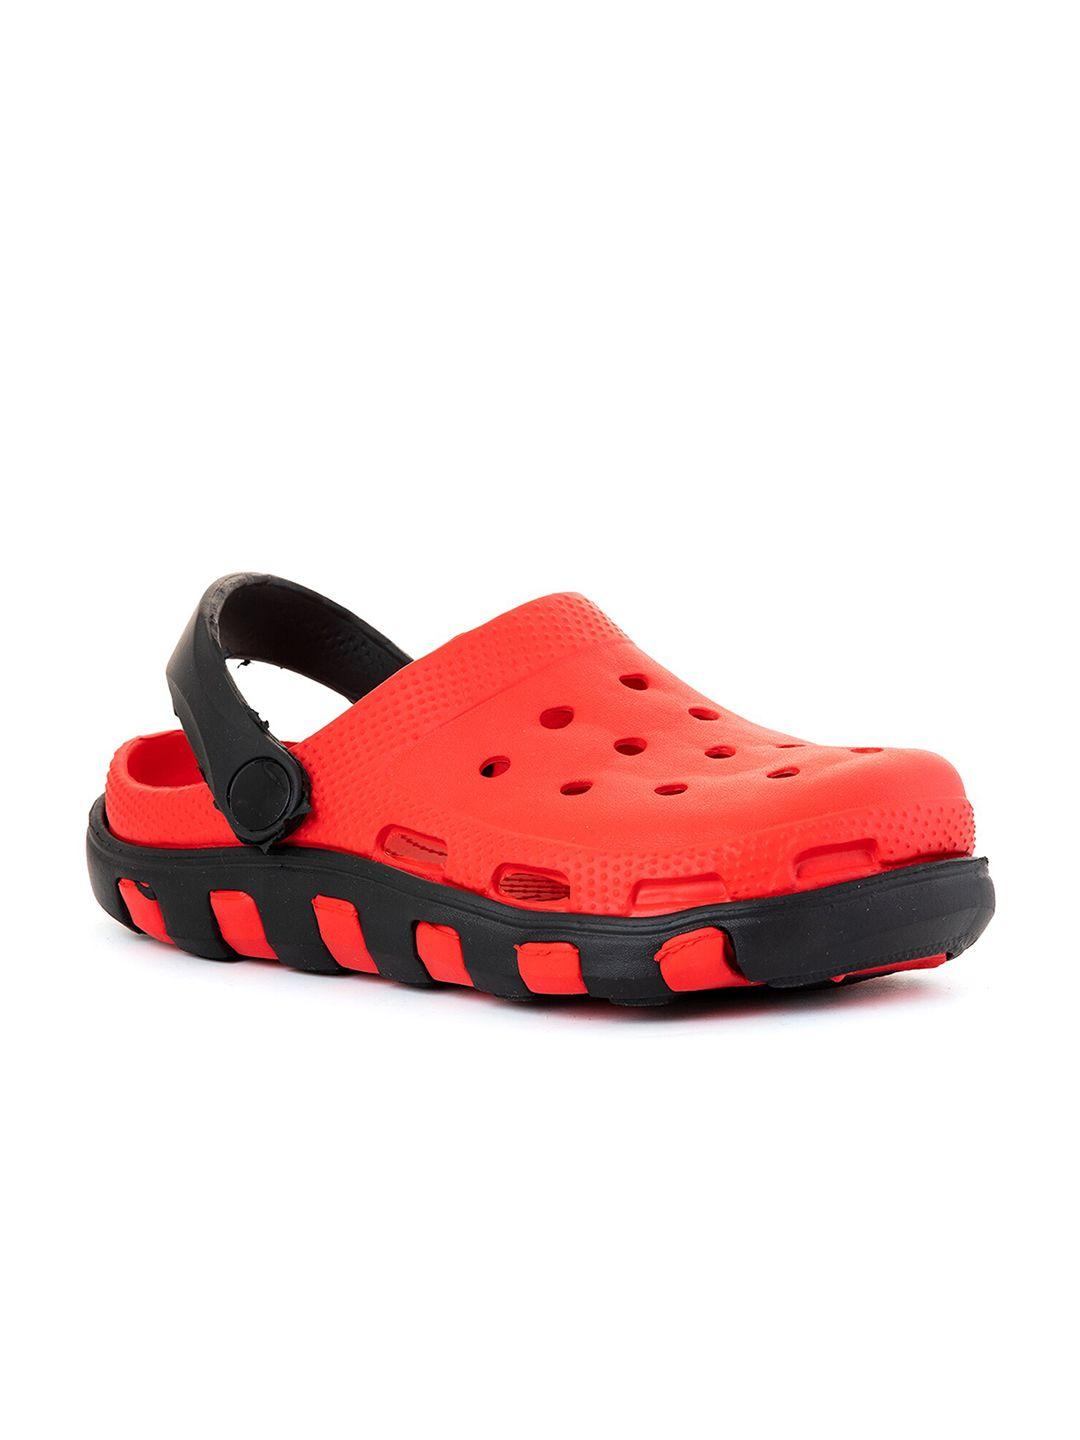 khadims boys red & black clogs sandals